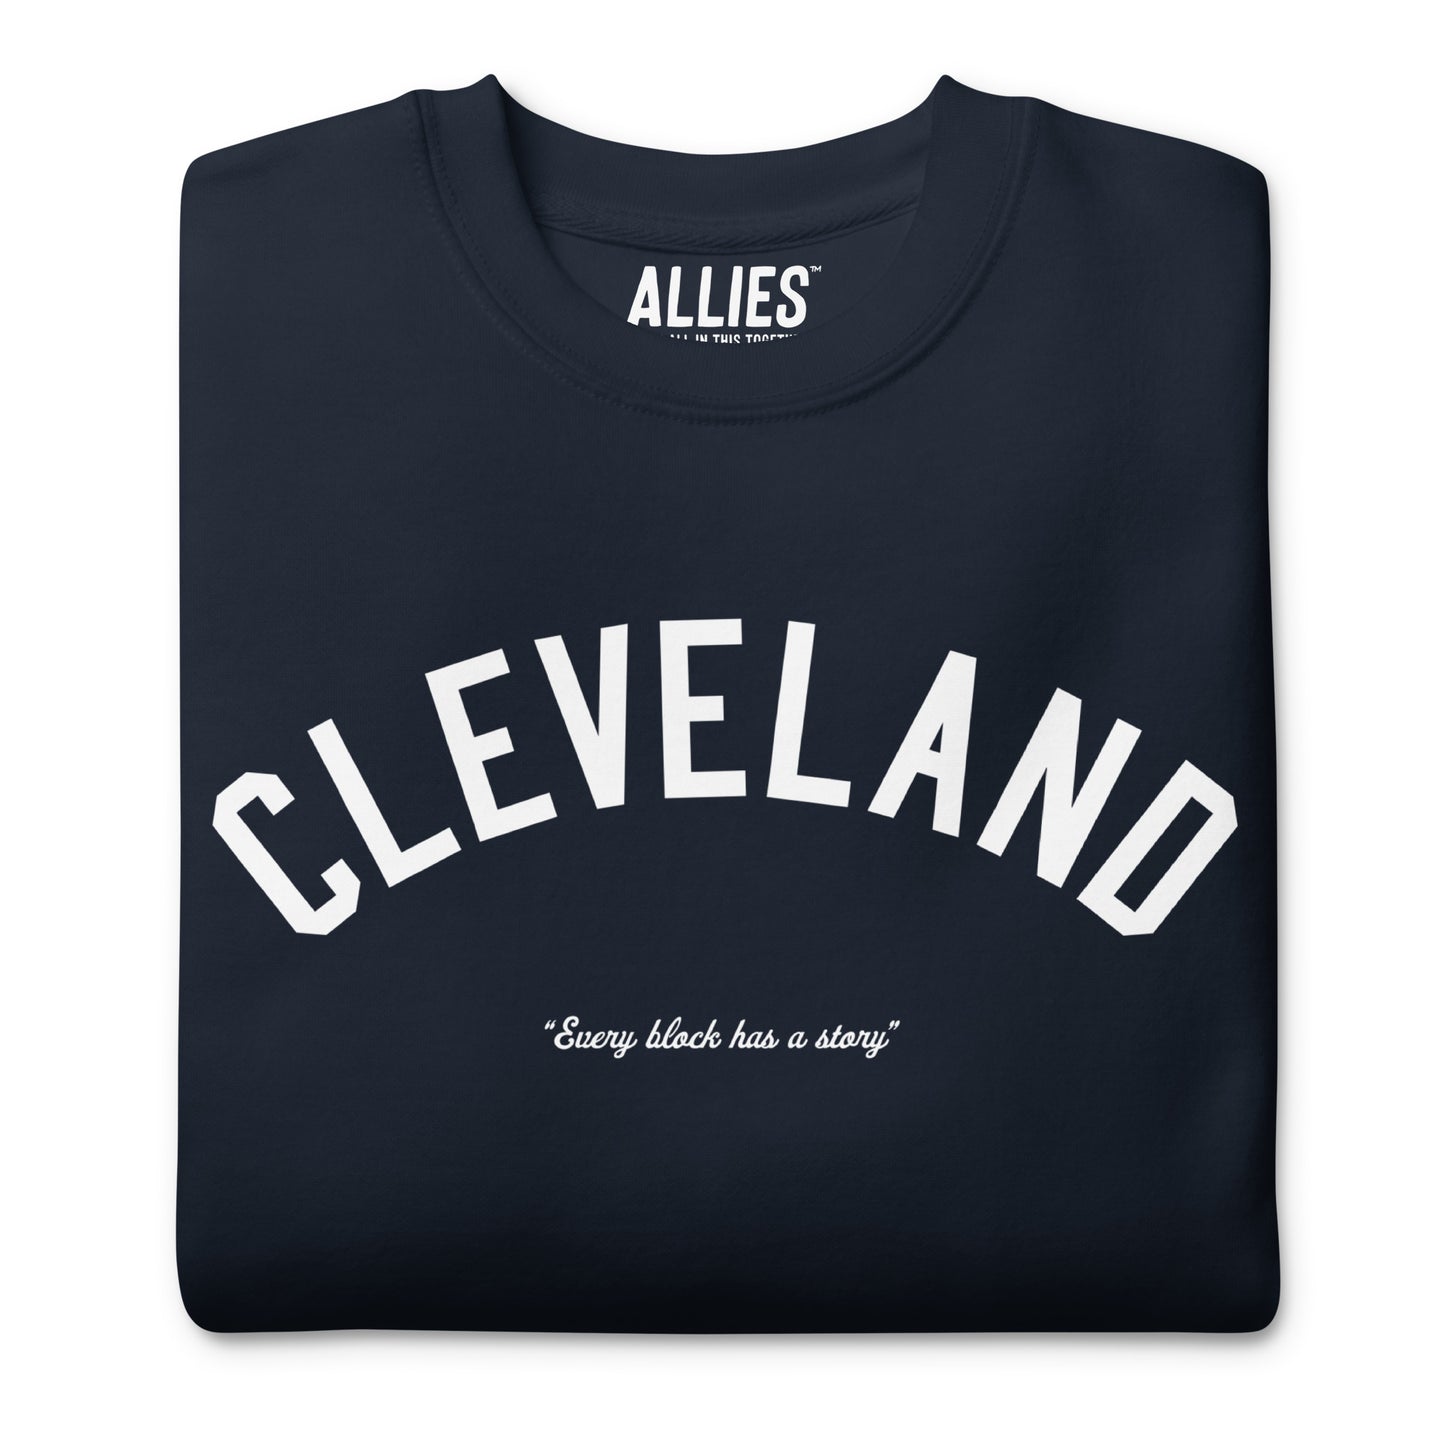 Cleveland Story Sweatshirt